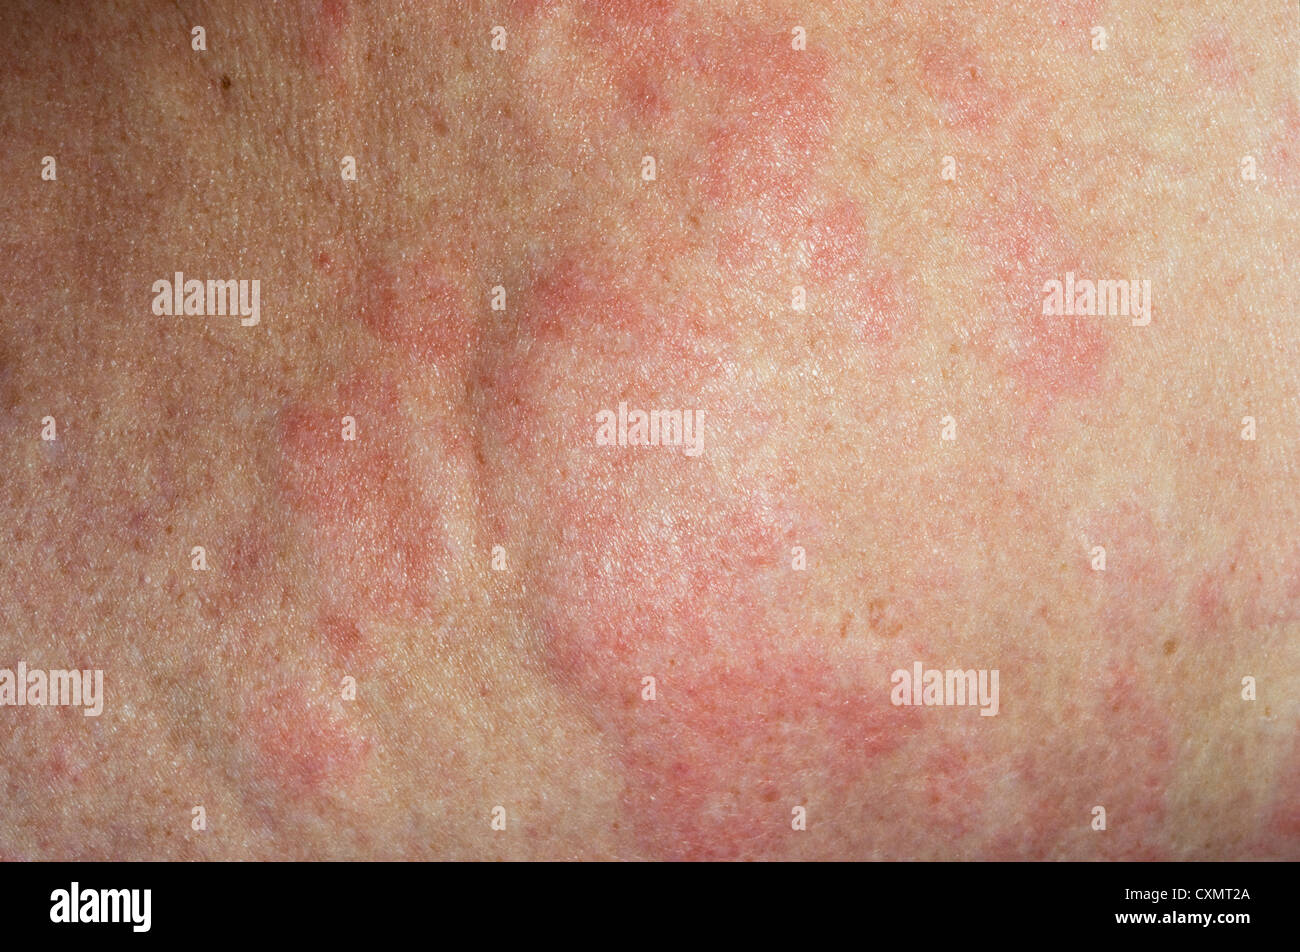 urticarial rash due to an allergic reaction to antibiotics Stock Photo ...